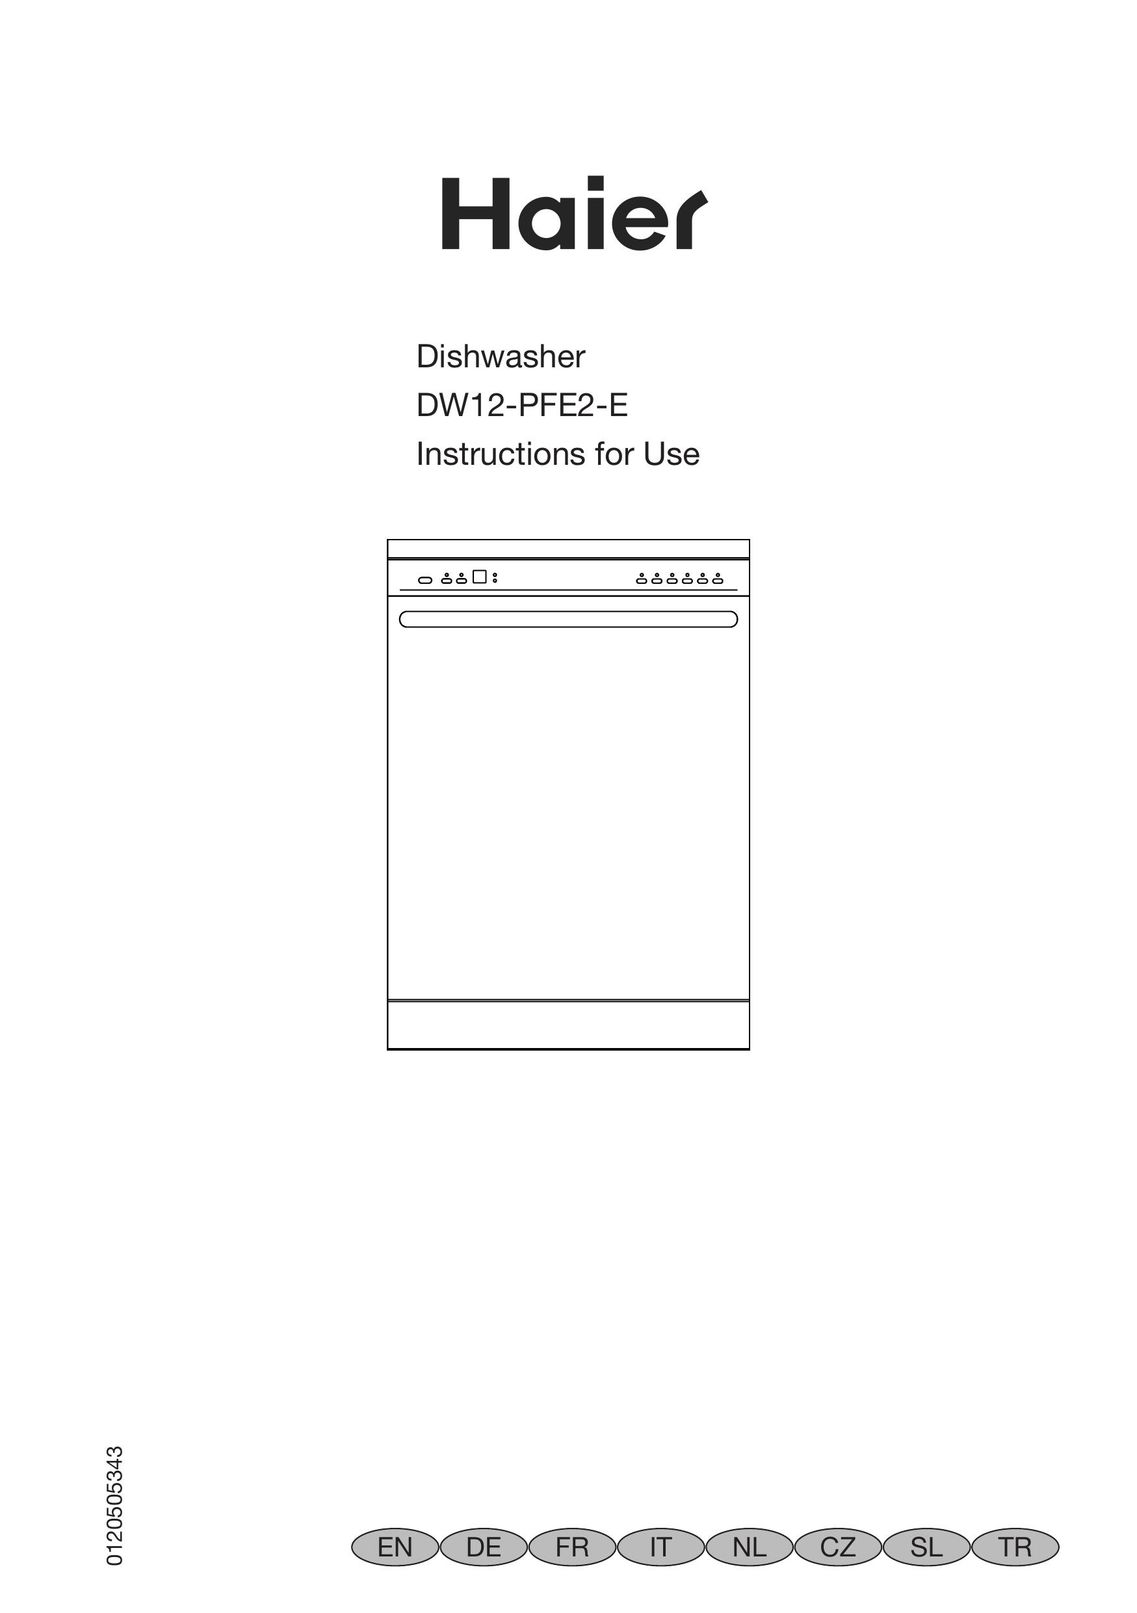 Haier DW12-PFE2-E Dishwasher User Manual